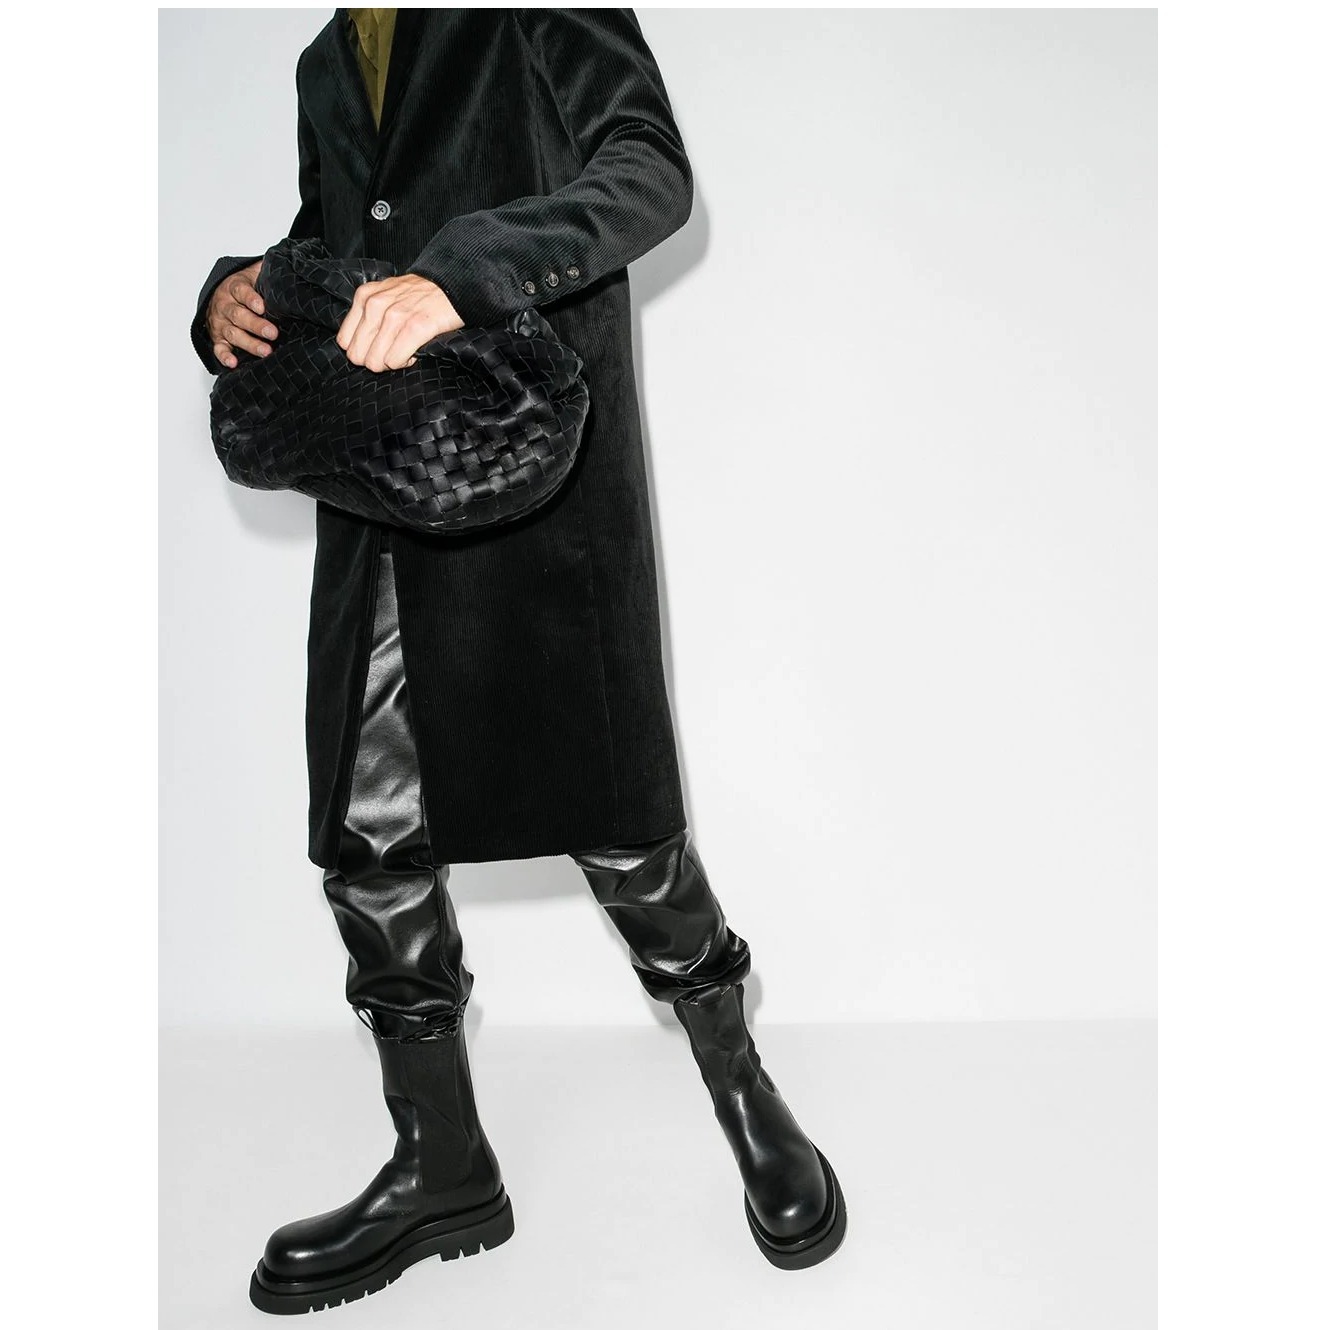 PlayboiCarti wears @rickowensonline x @moncler coat and #rickowens boots.  #upscalehype #playboicarti #playboicartiuh #moncler